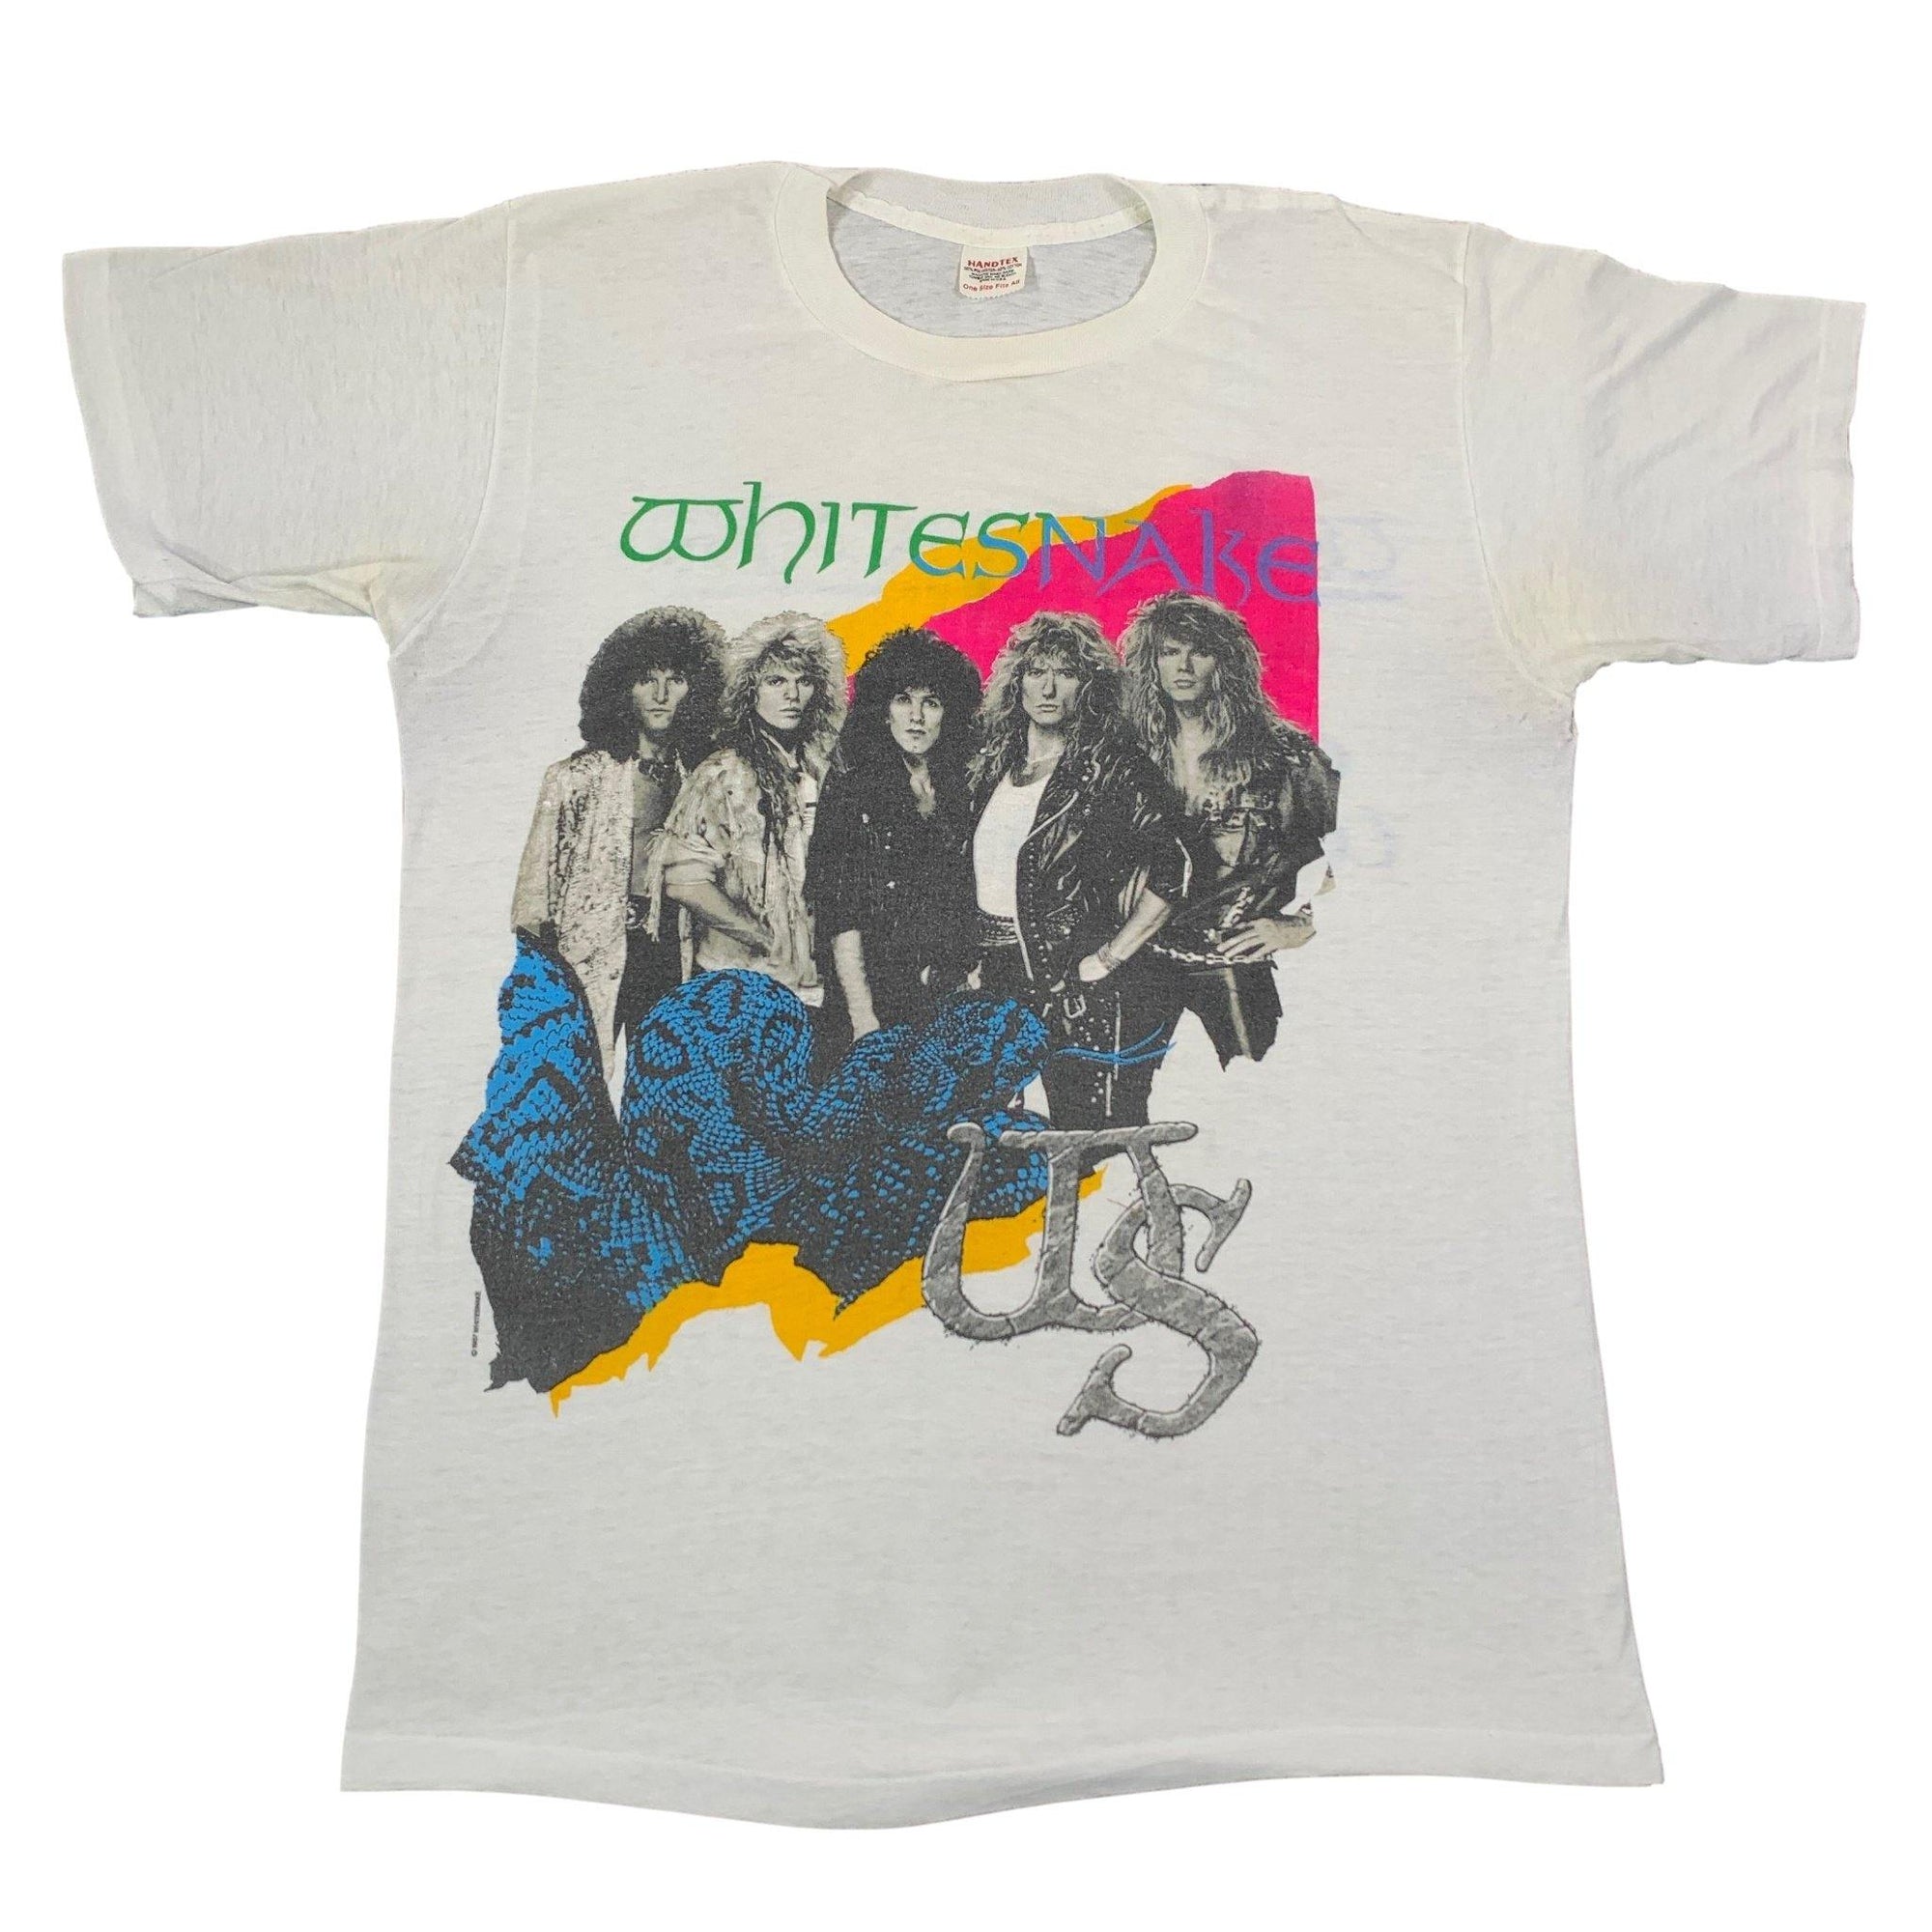 Vintage Whitesnake "North America" Tour T-Shirt - jointcustodydc